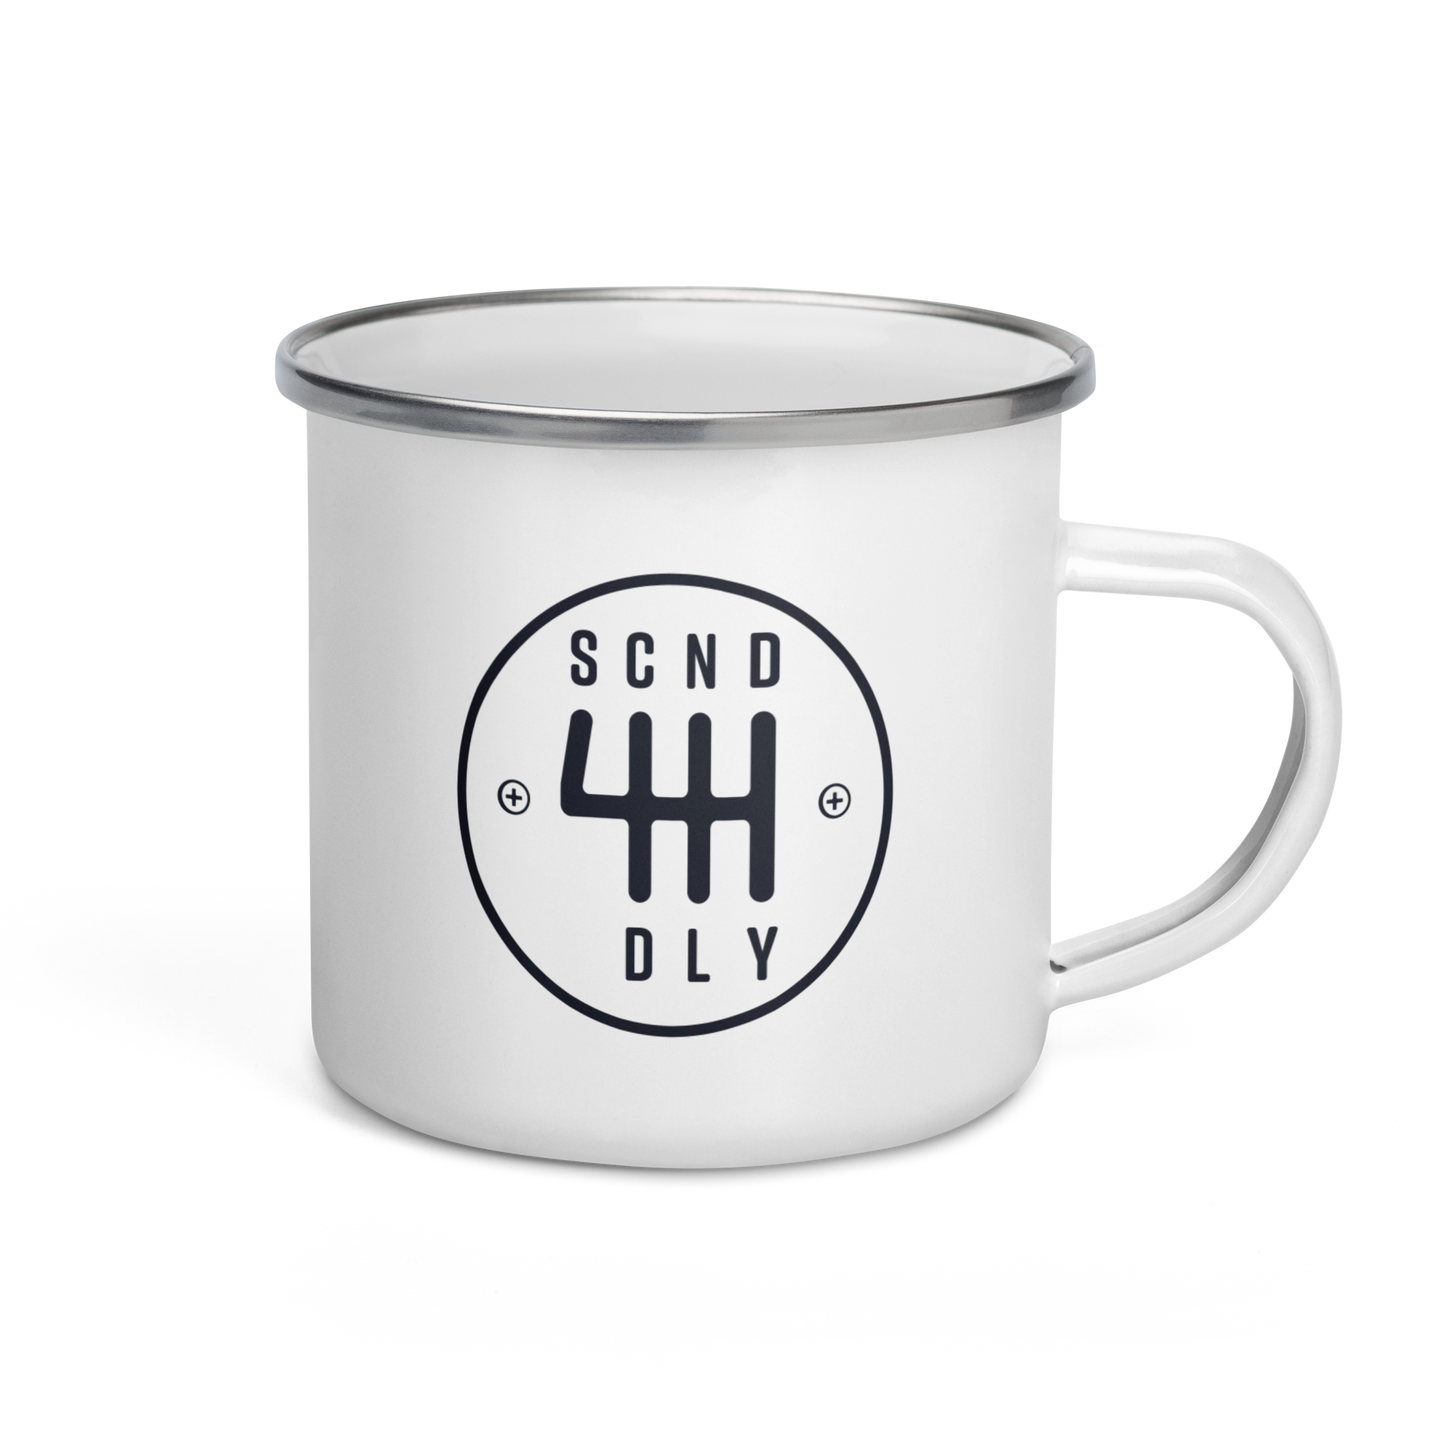 Second Daily - Defender 90 - Enamel Mug